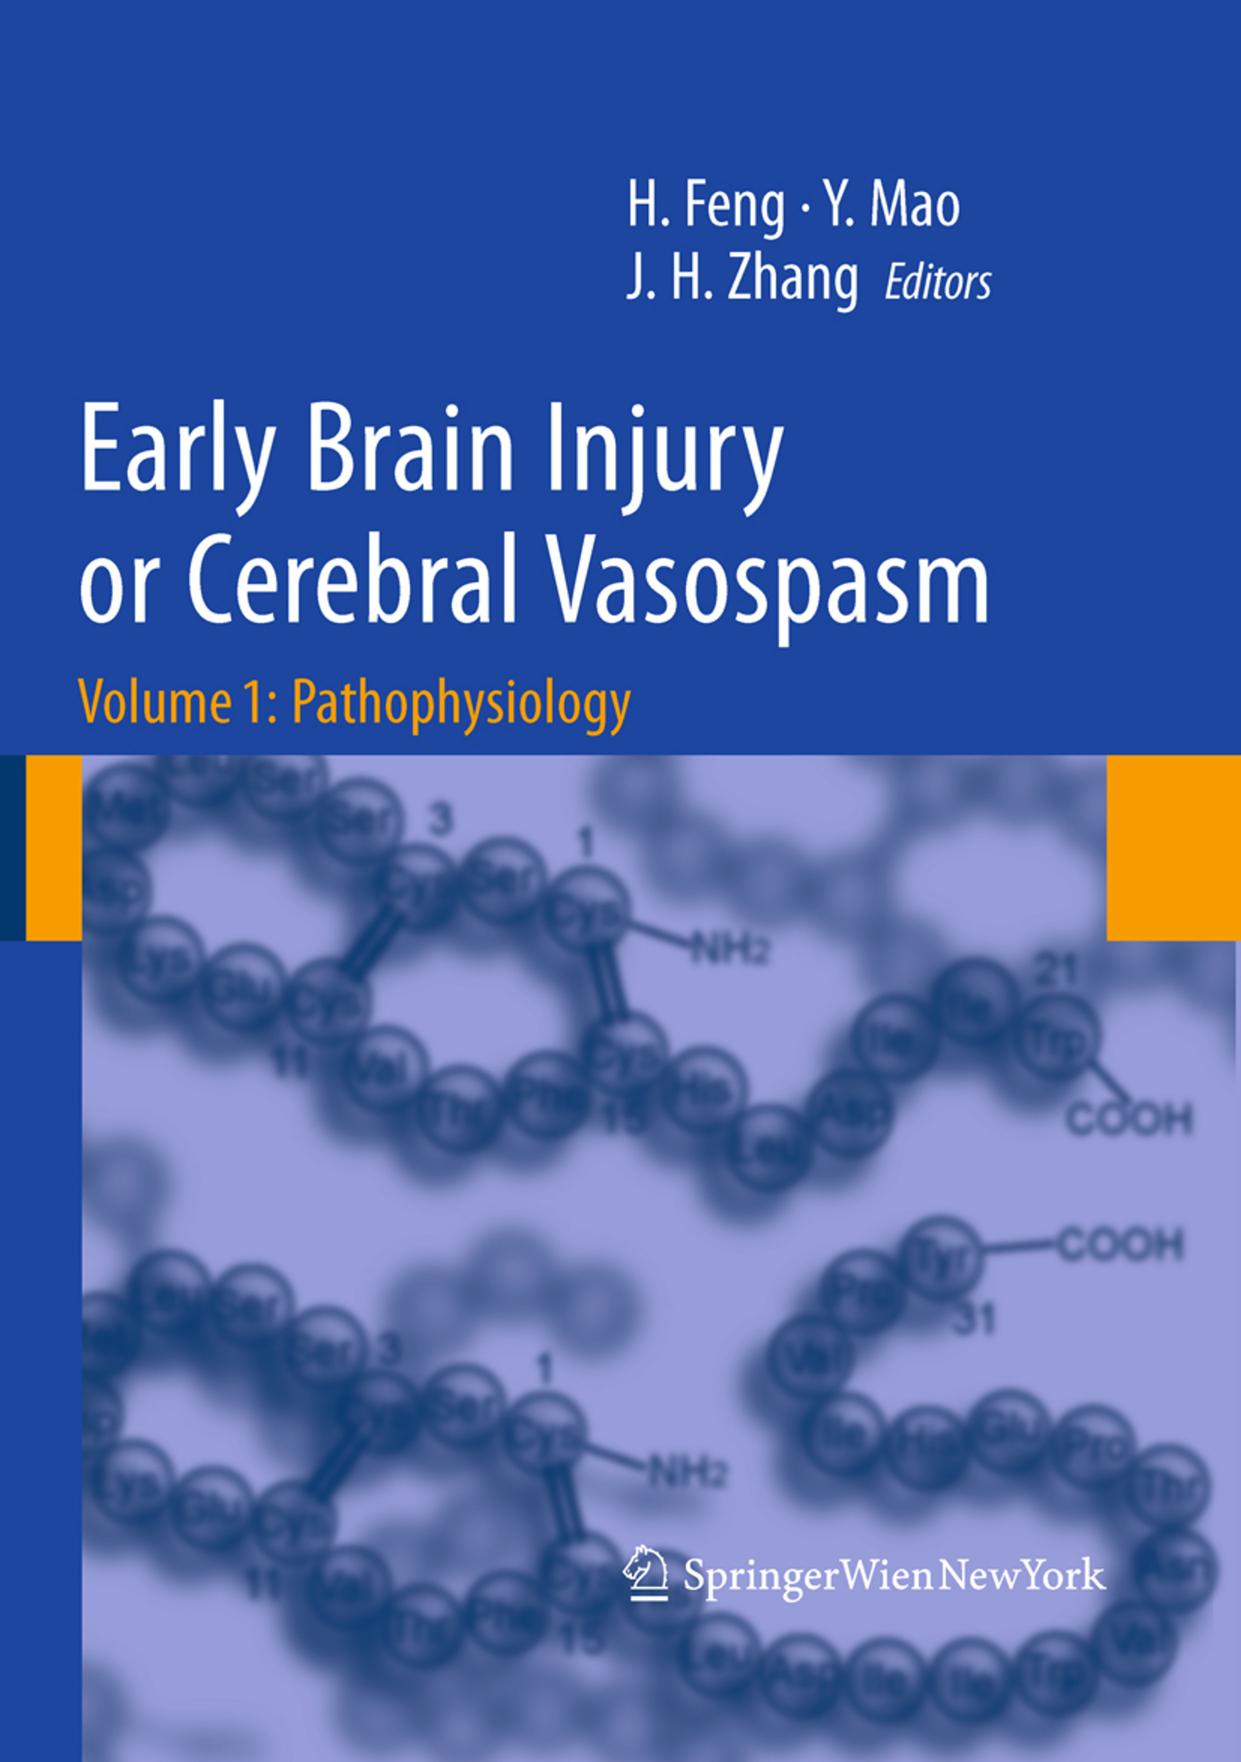 Early Brain Injury or Cerebral Vasospasm_ Volume 1_ Pathophysiology (Acta Neurochirurgica Supplementum, 110).jpg